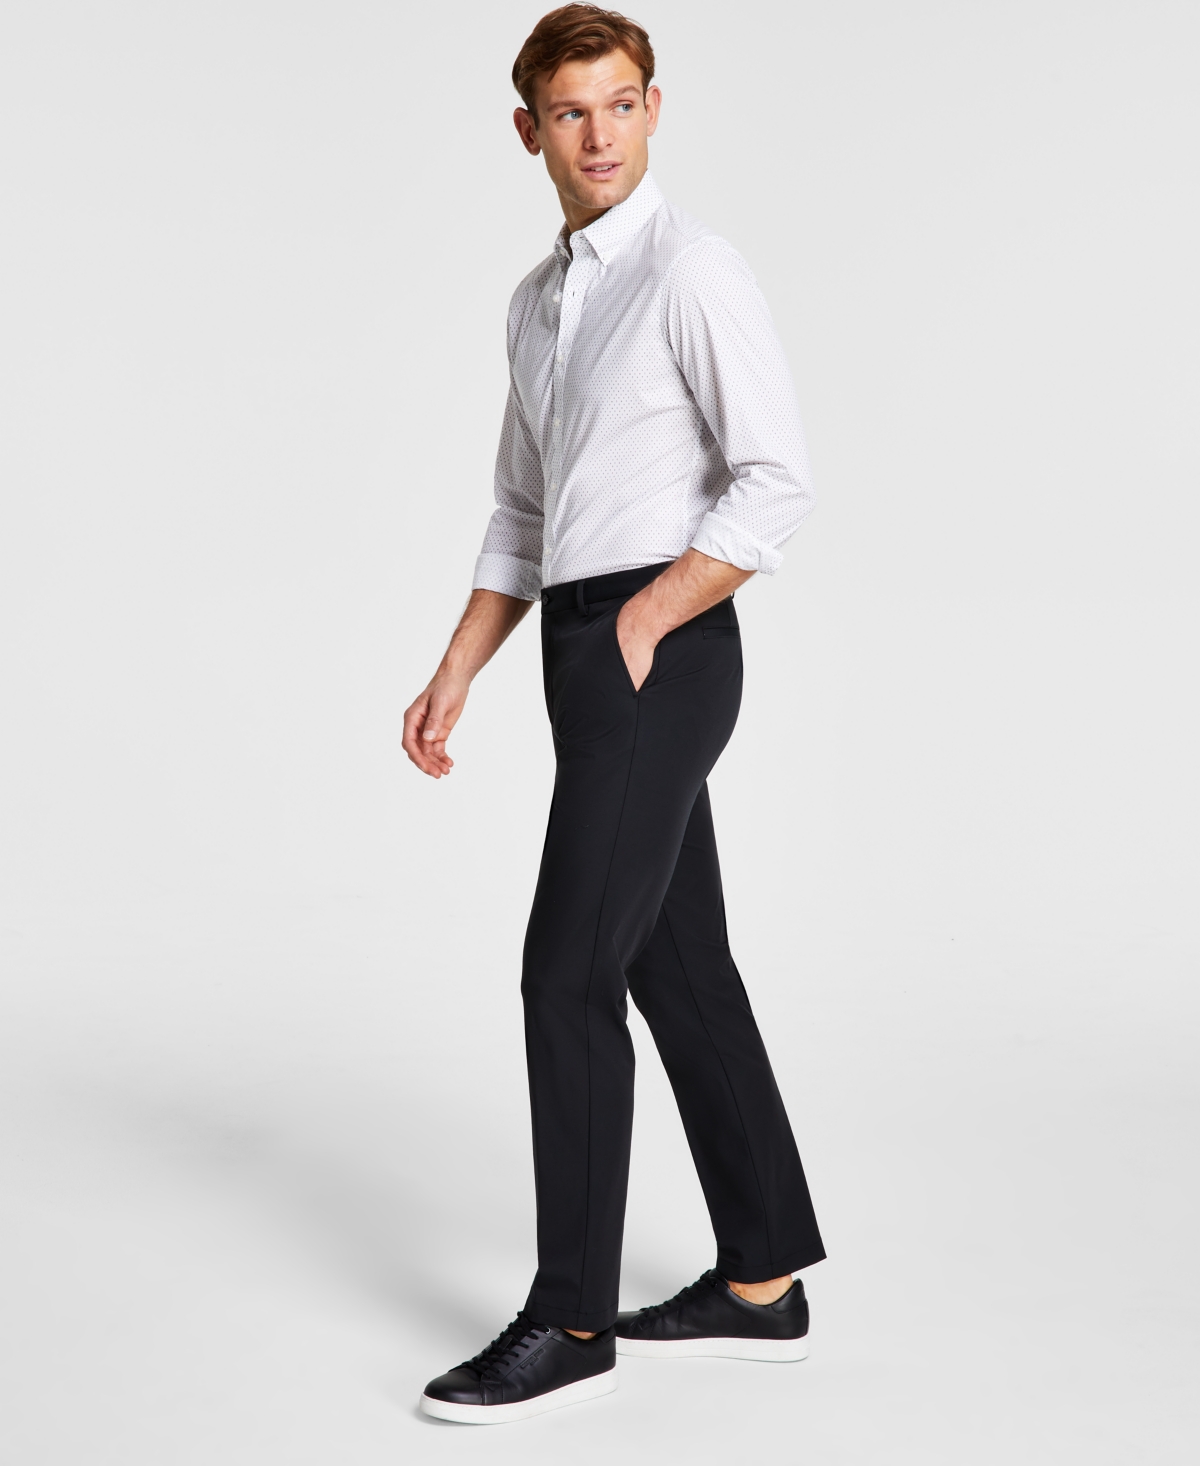 Michael Kors Men's Classic Fit Cotton Stretch Performance Pants In Black